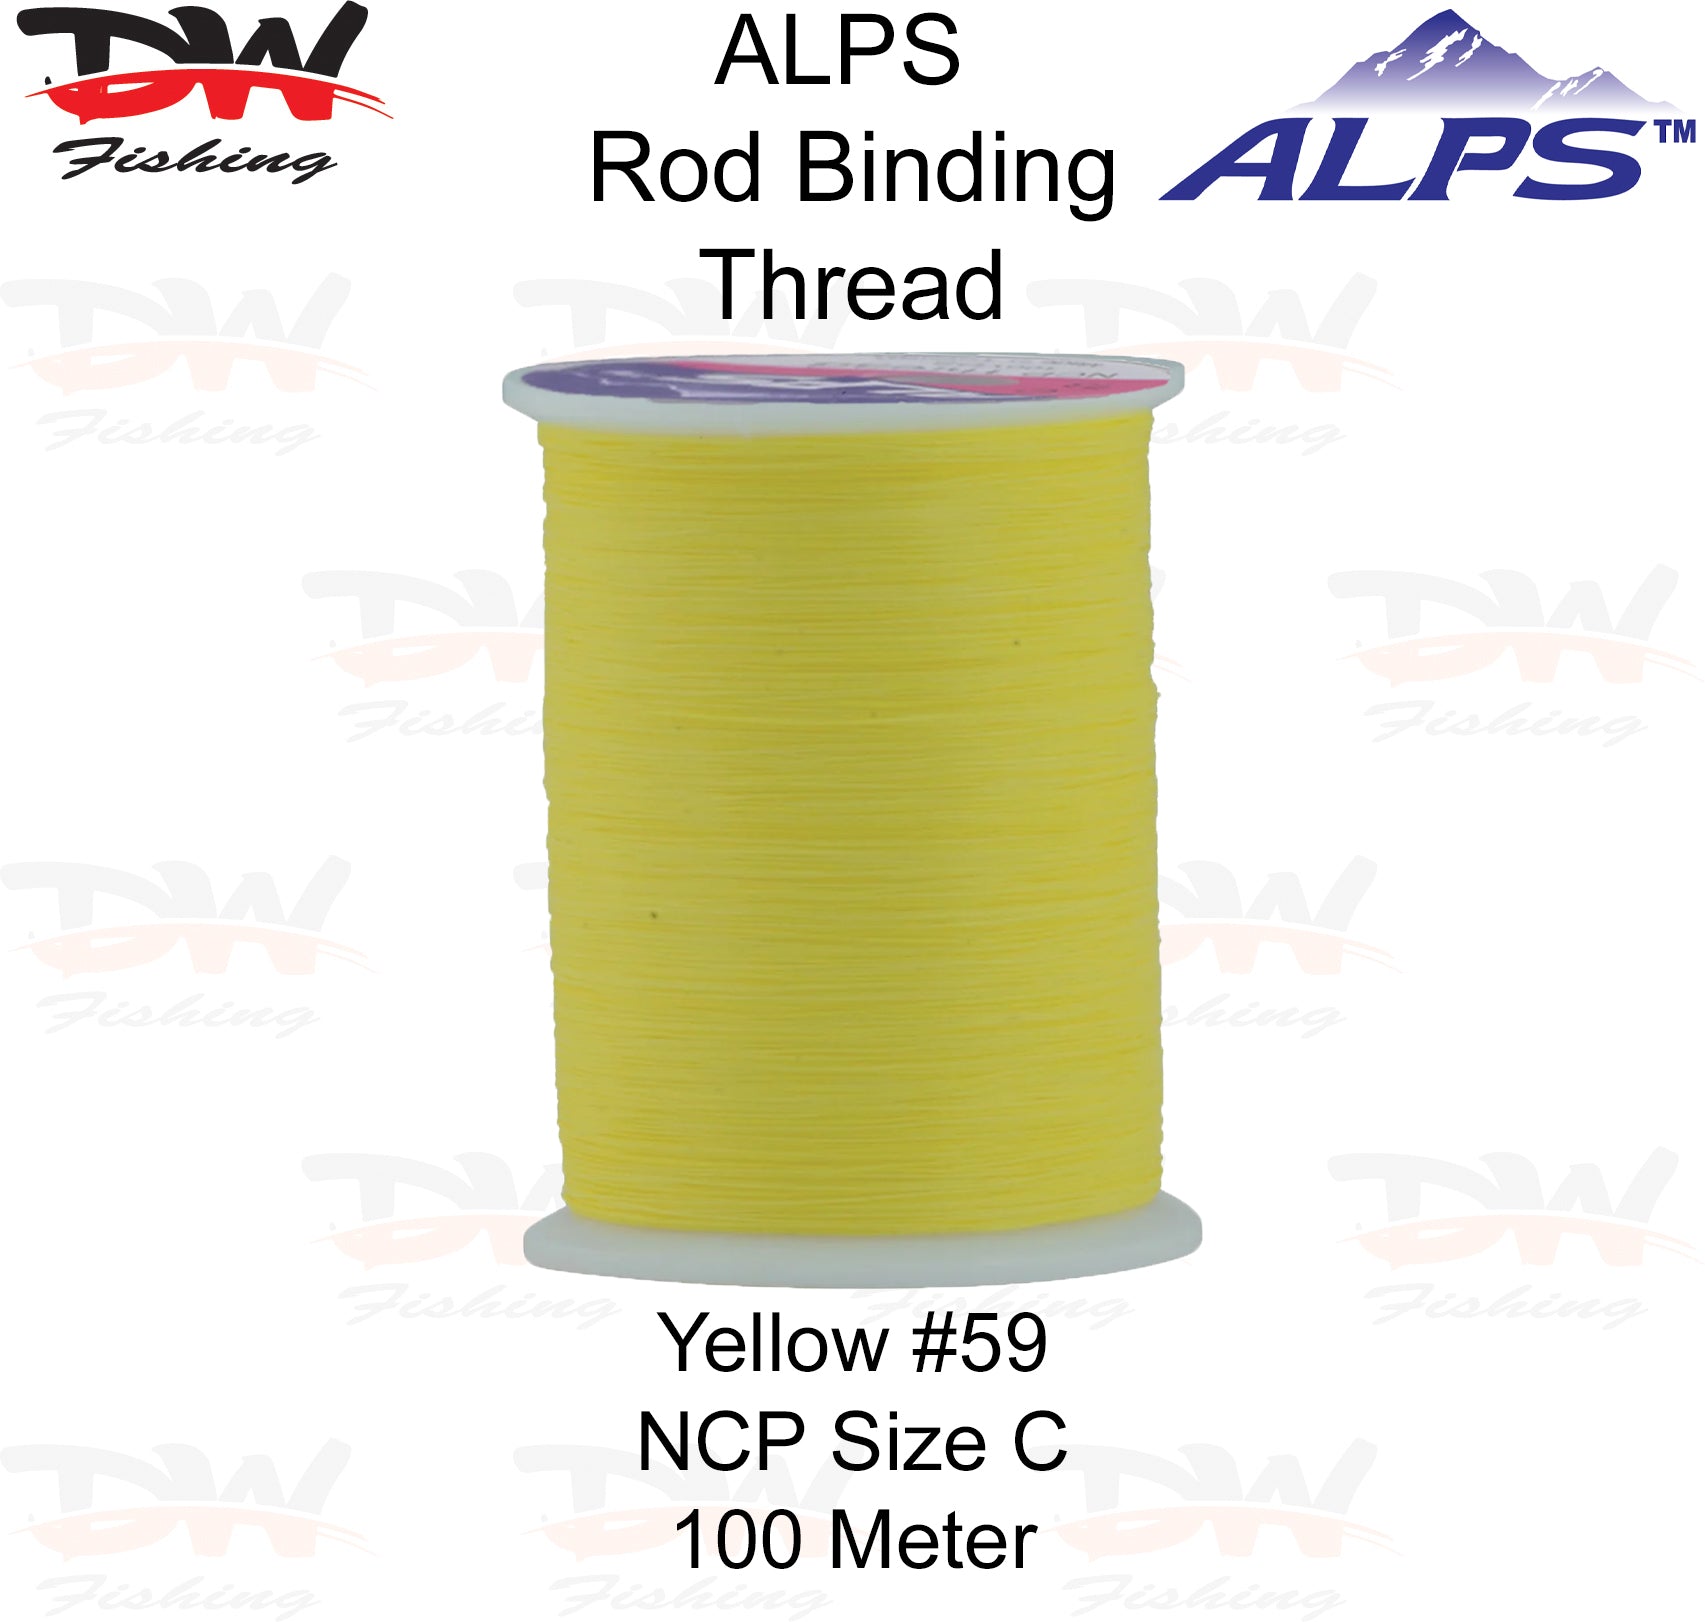 ALPS Rod Binding Thread | NCP Nylon Thread Size C 100mtrs